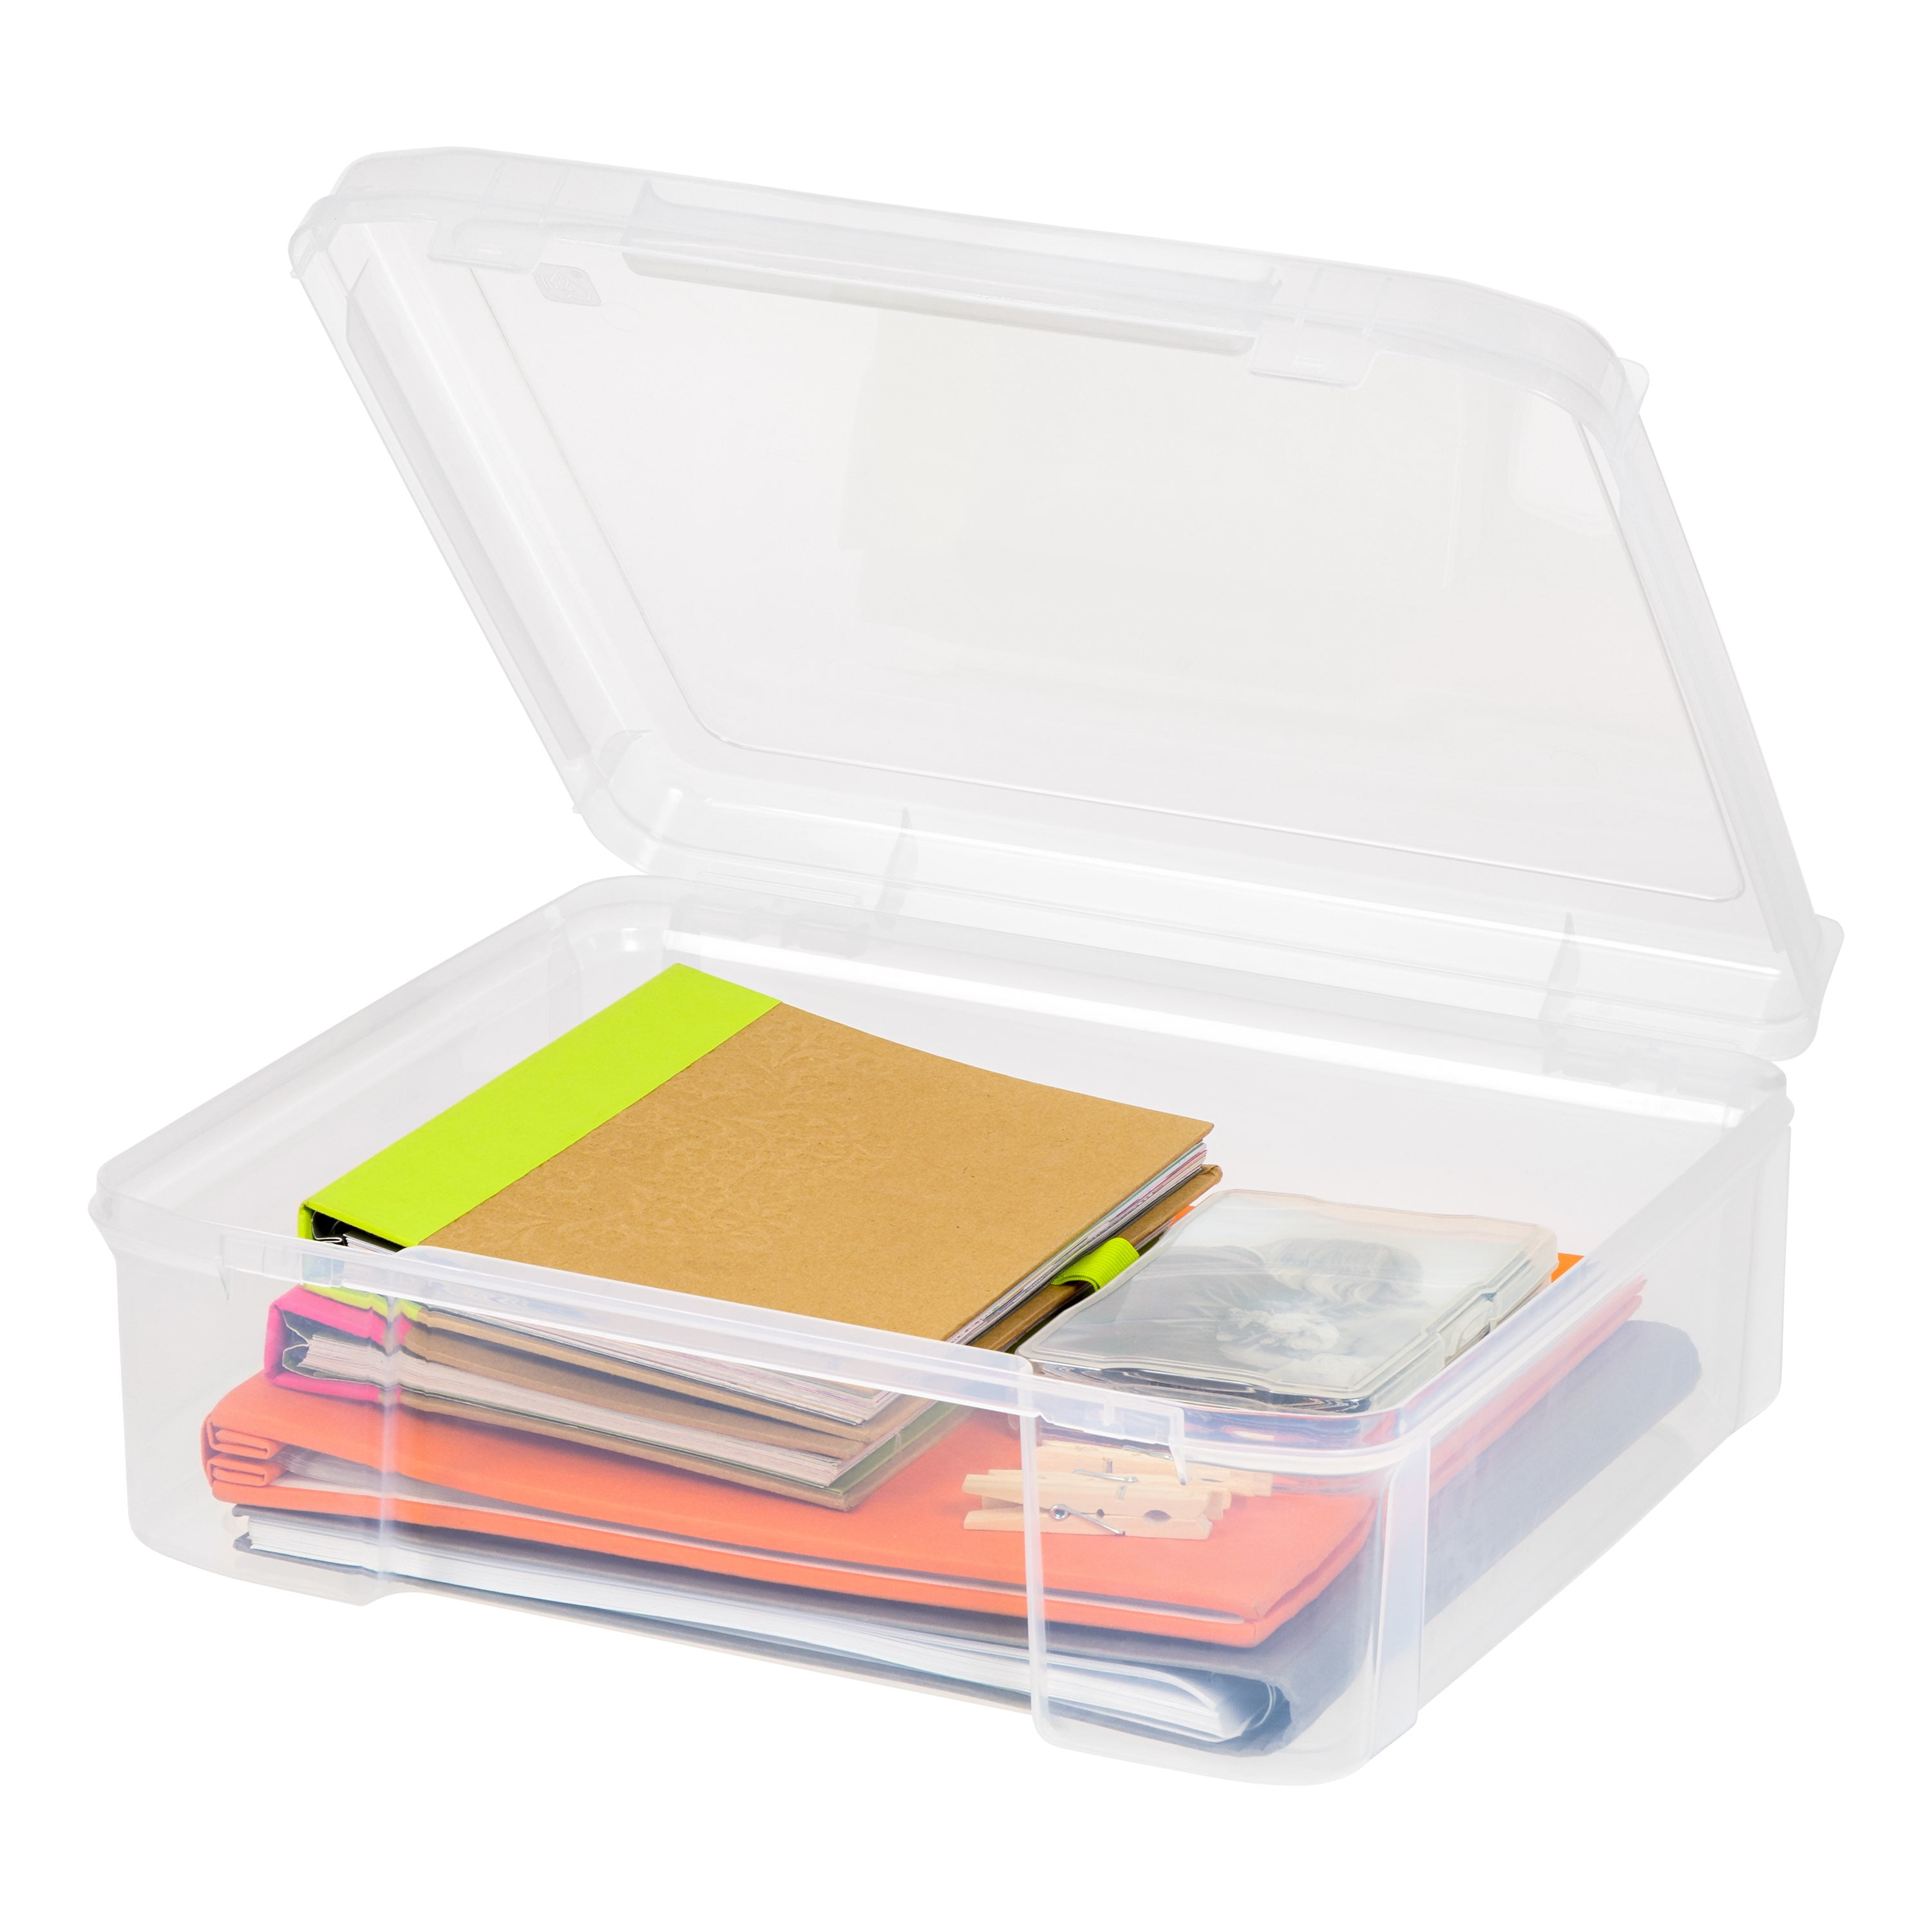 Iris USA Portable Project Case for 8 x 8 Paper - ShopStyle Baskets & Boxes